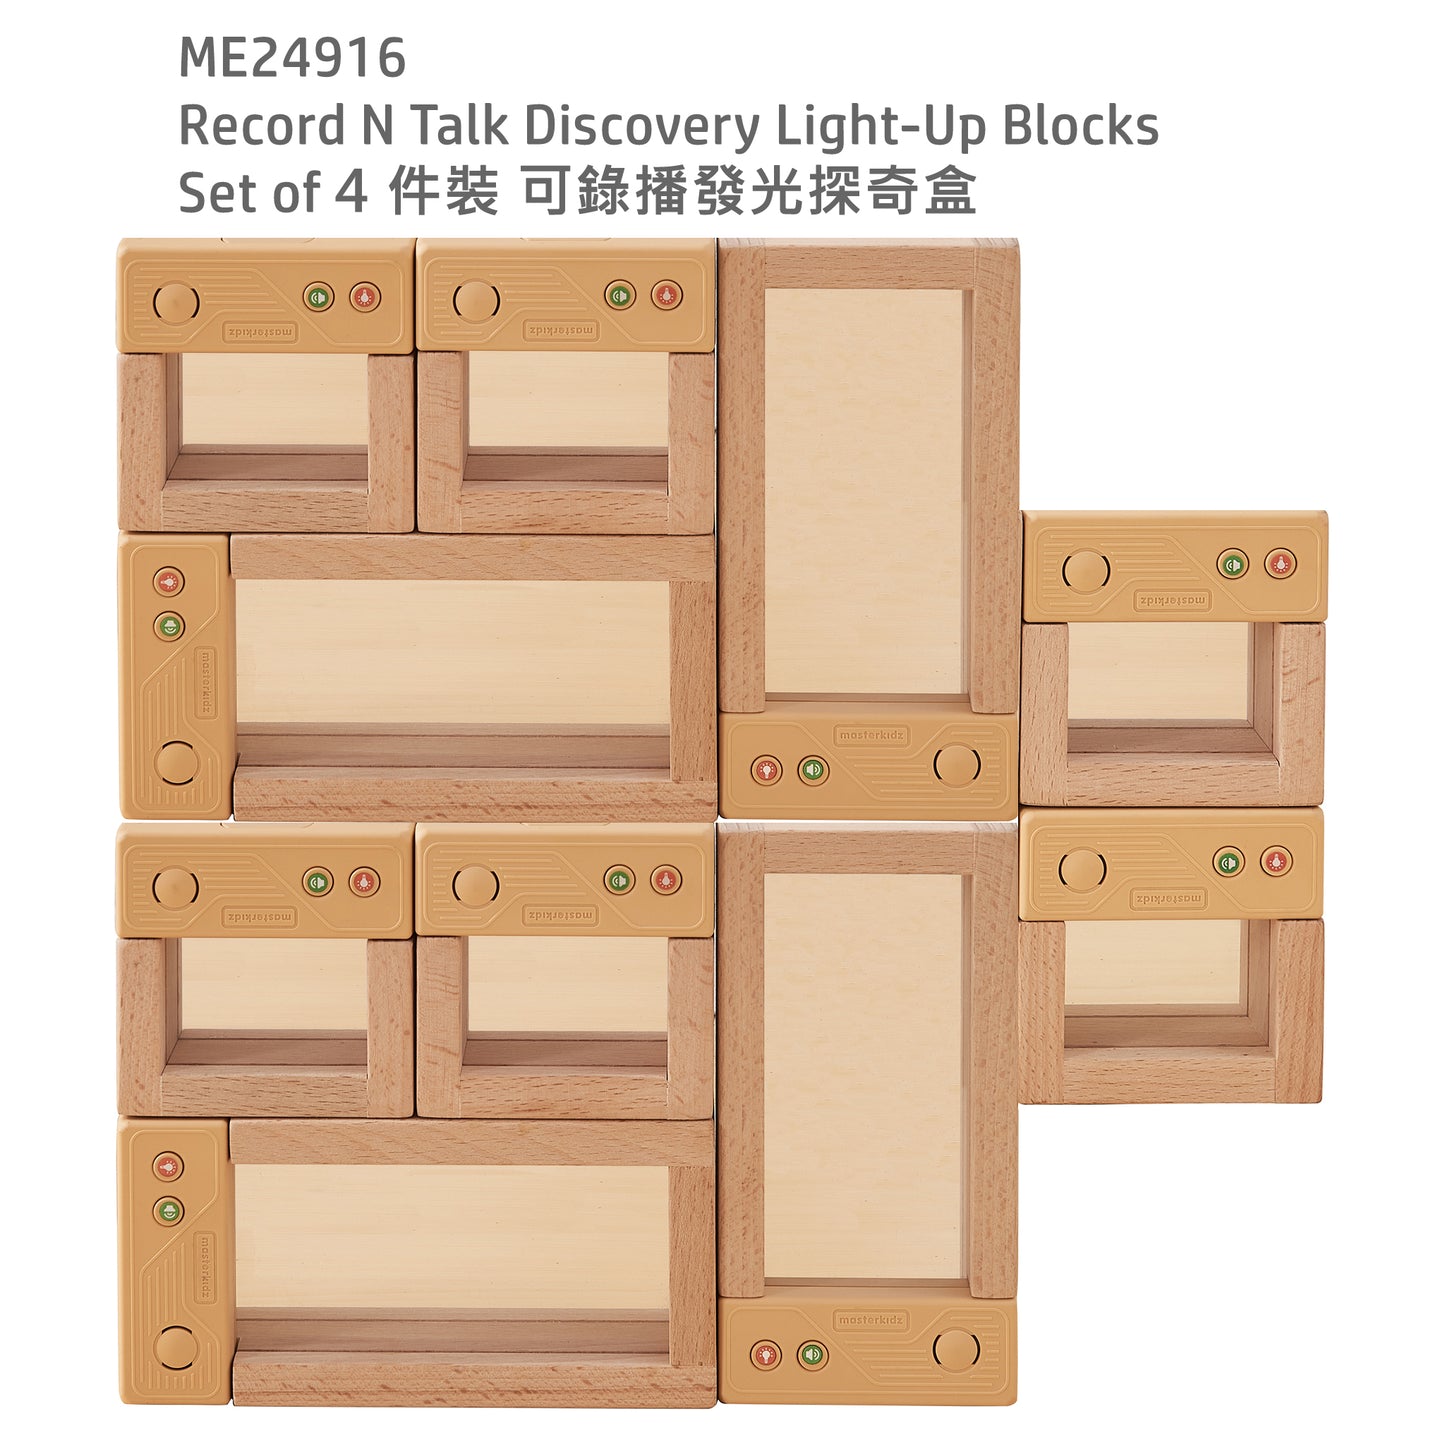 Record 'N Talk Discovery Light-Up Blocks 可錄播發光探奇盒